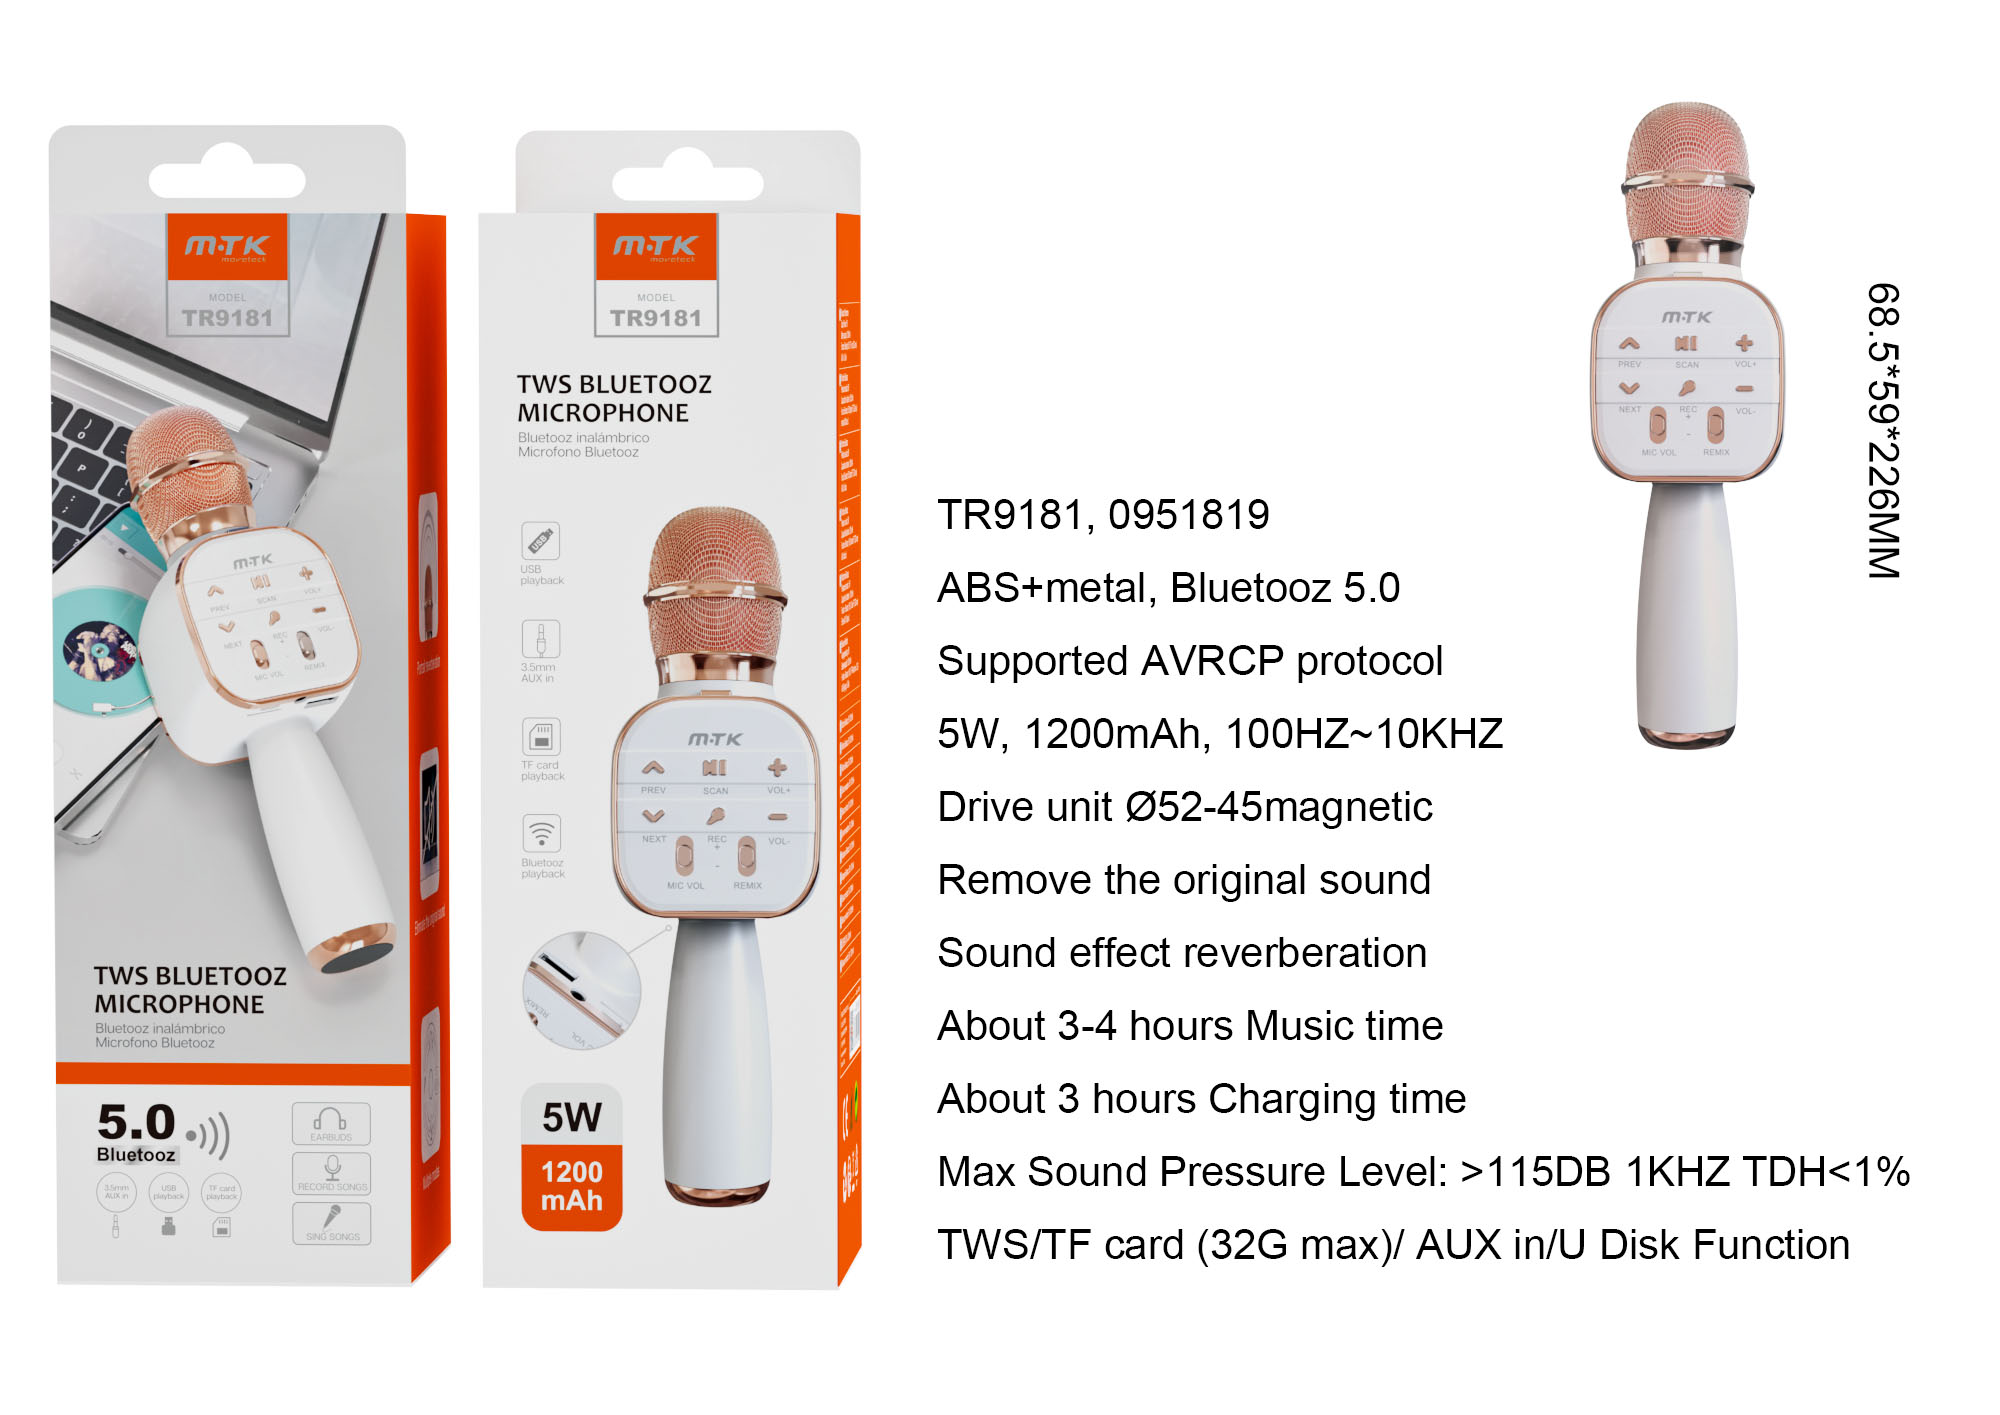 TR9181 RS+OR Microfono TWS Bluetooth 5.0 AVRCP, Frecuncia100Hz-10KHz, Soporta Entrada de audio/USB/TF (32GMax), Bateria 1200mAh/5W, Rosa+Oro